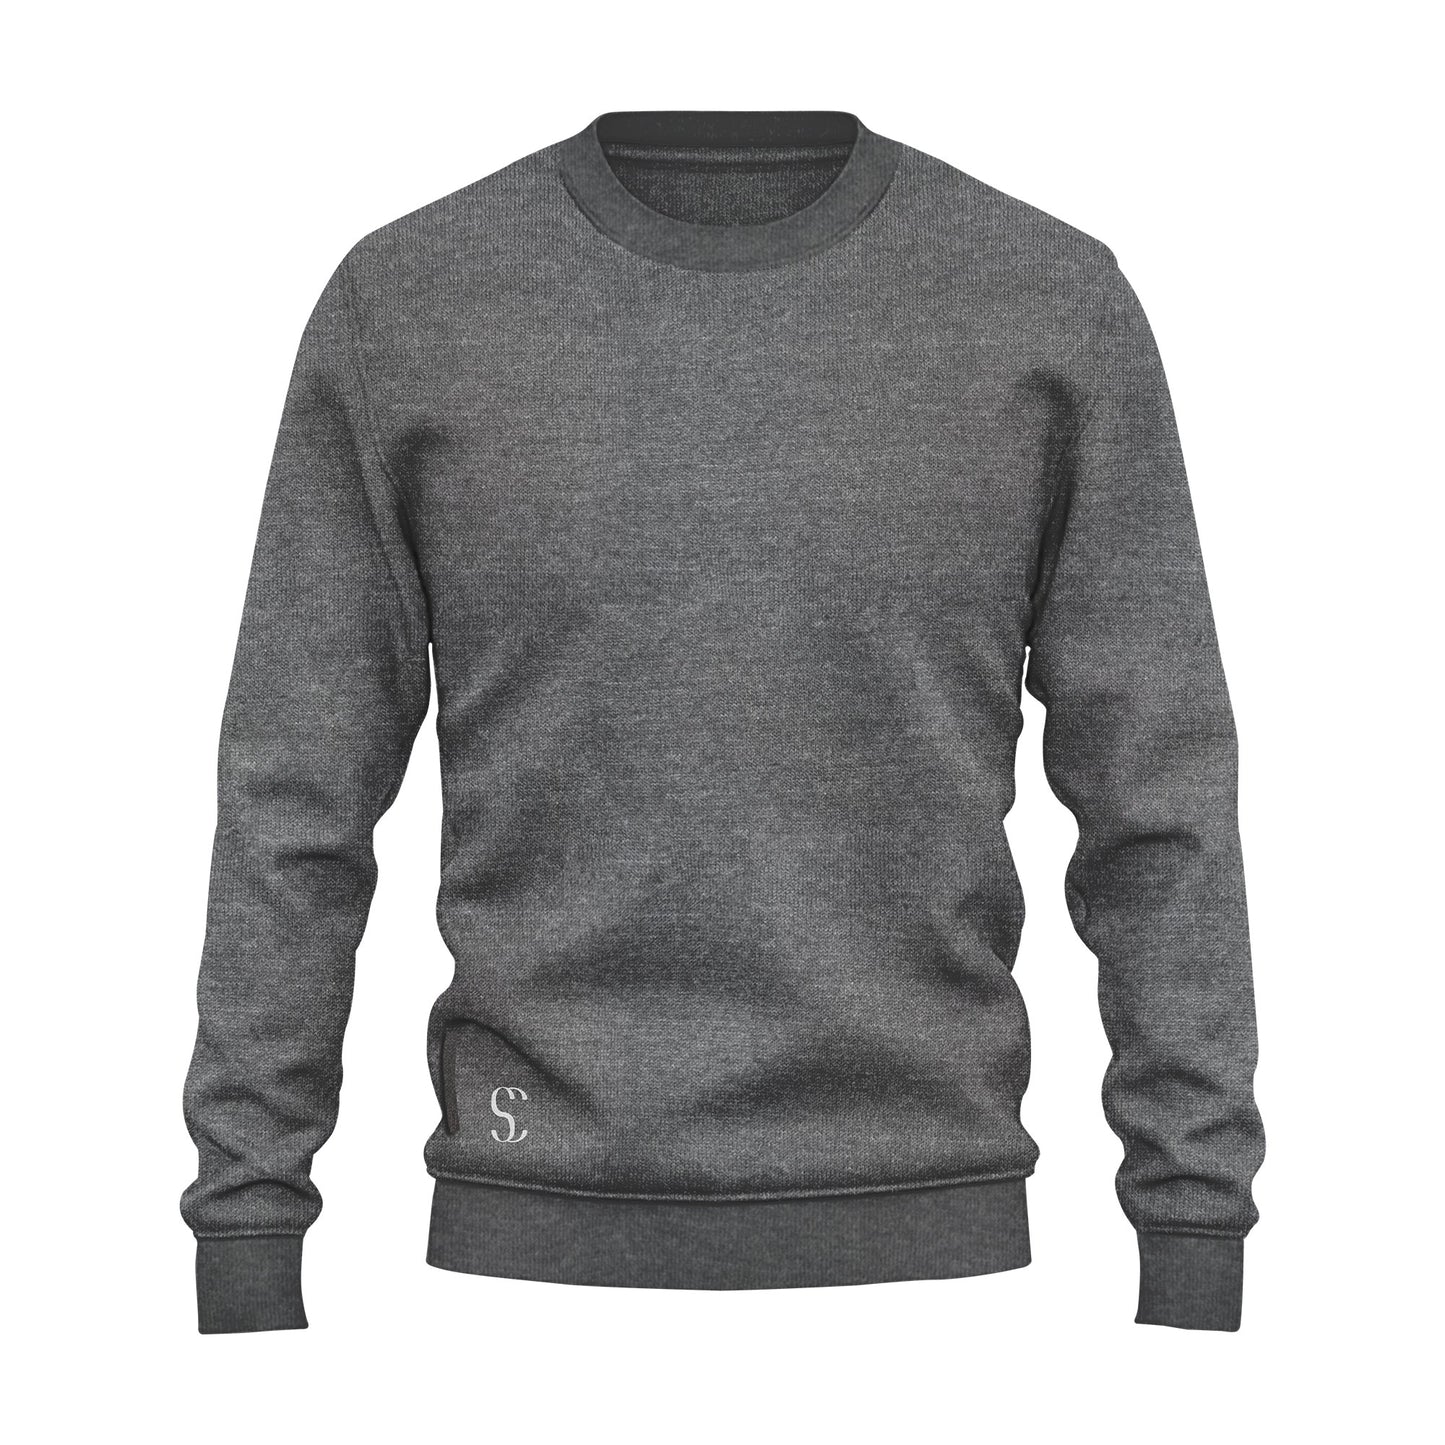 Men's Charcoal Grey Crewneck Fleece Sweatshirt